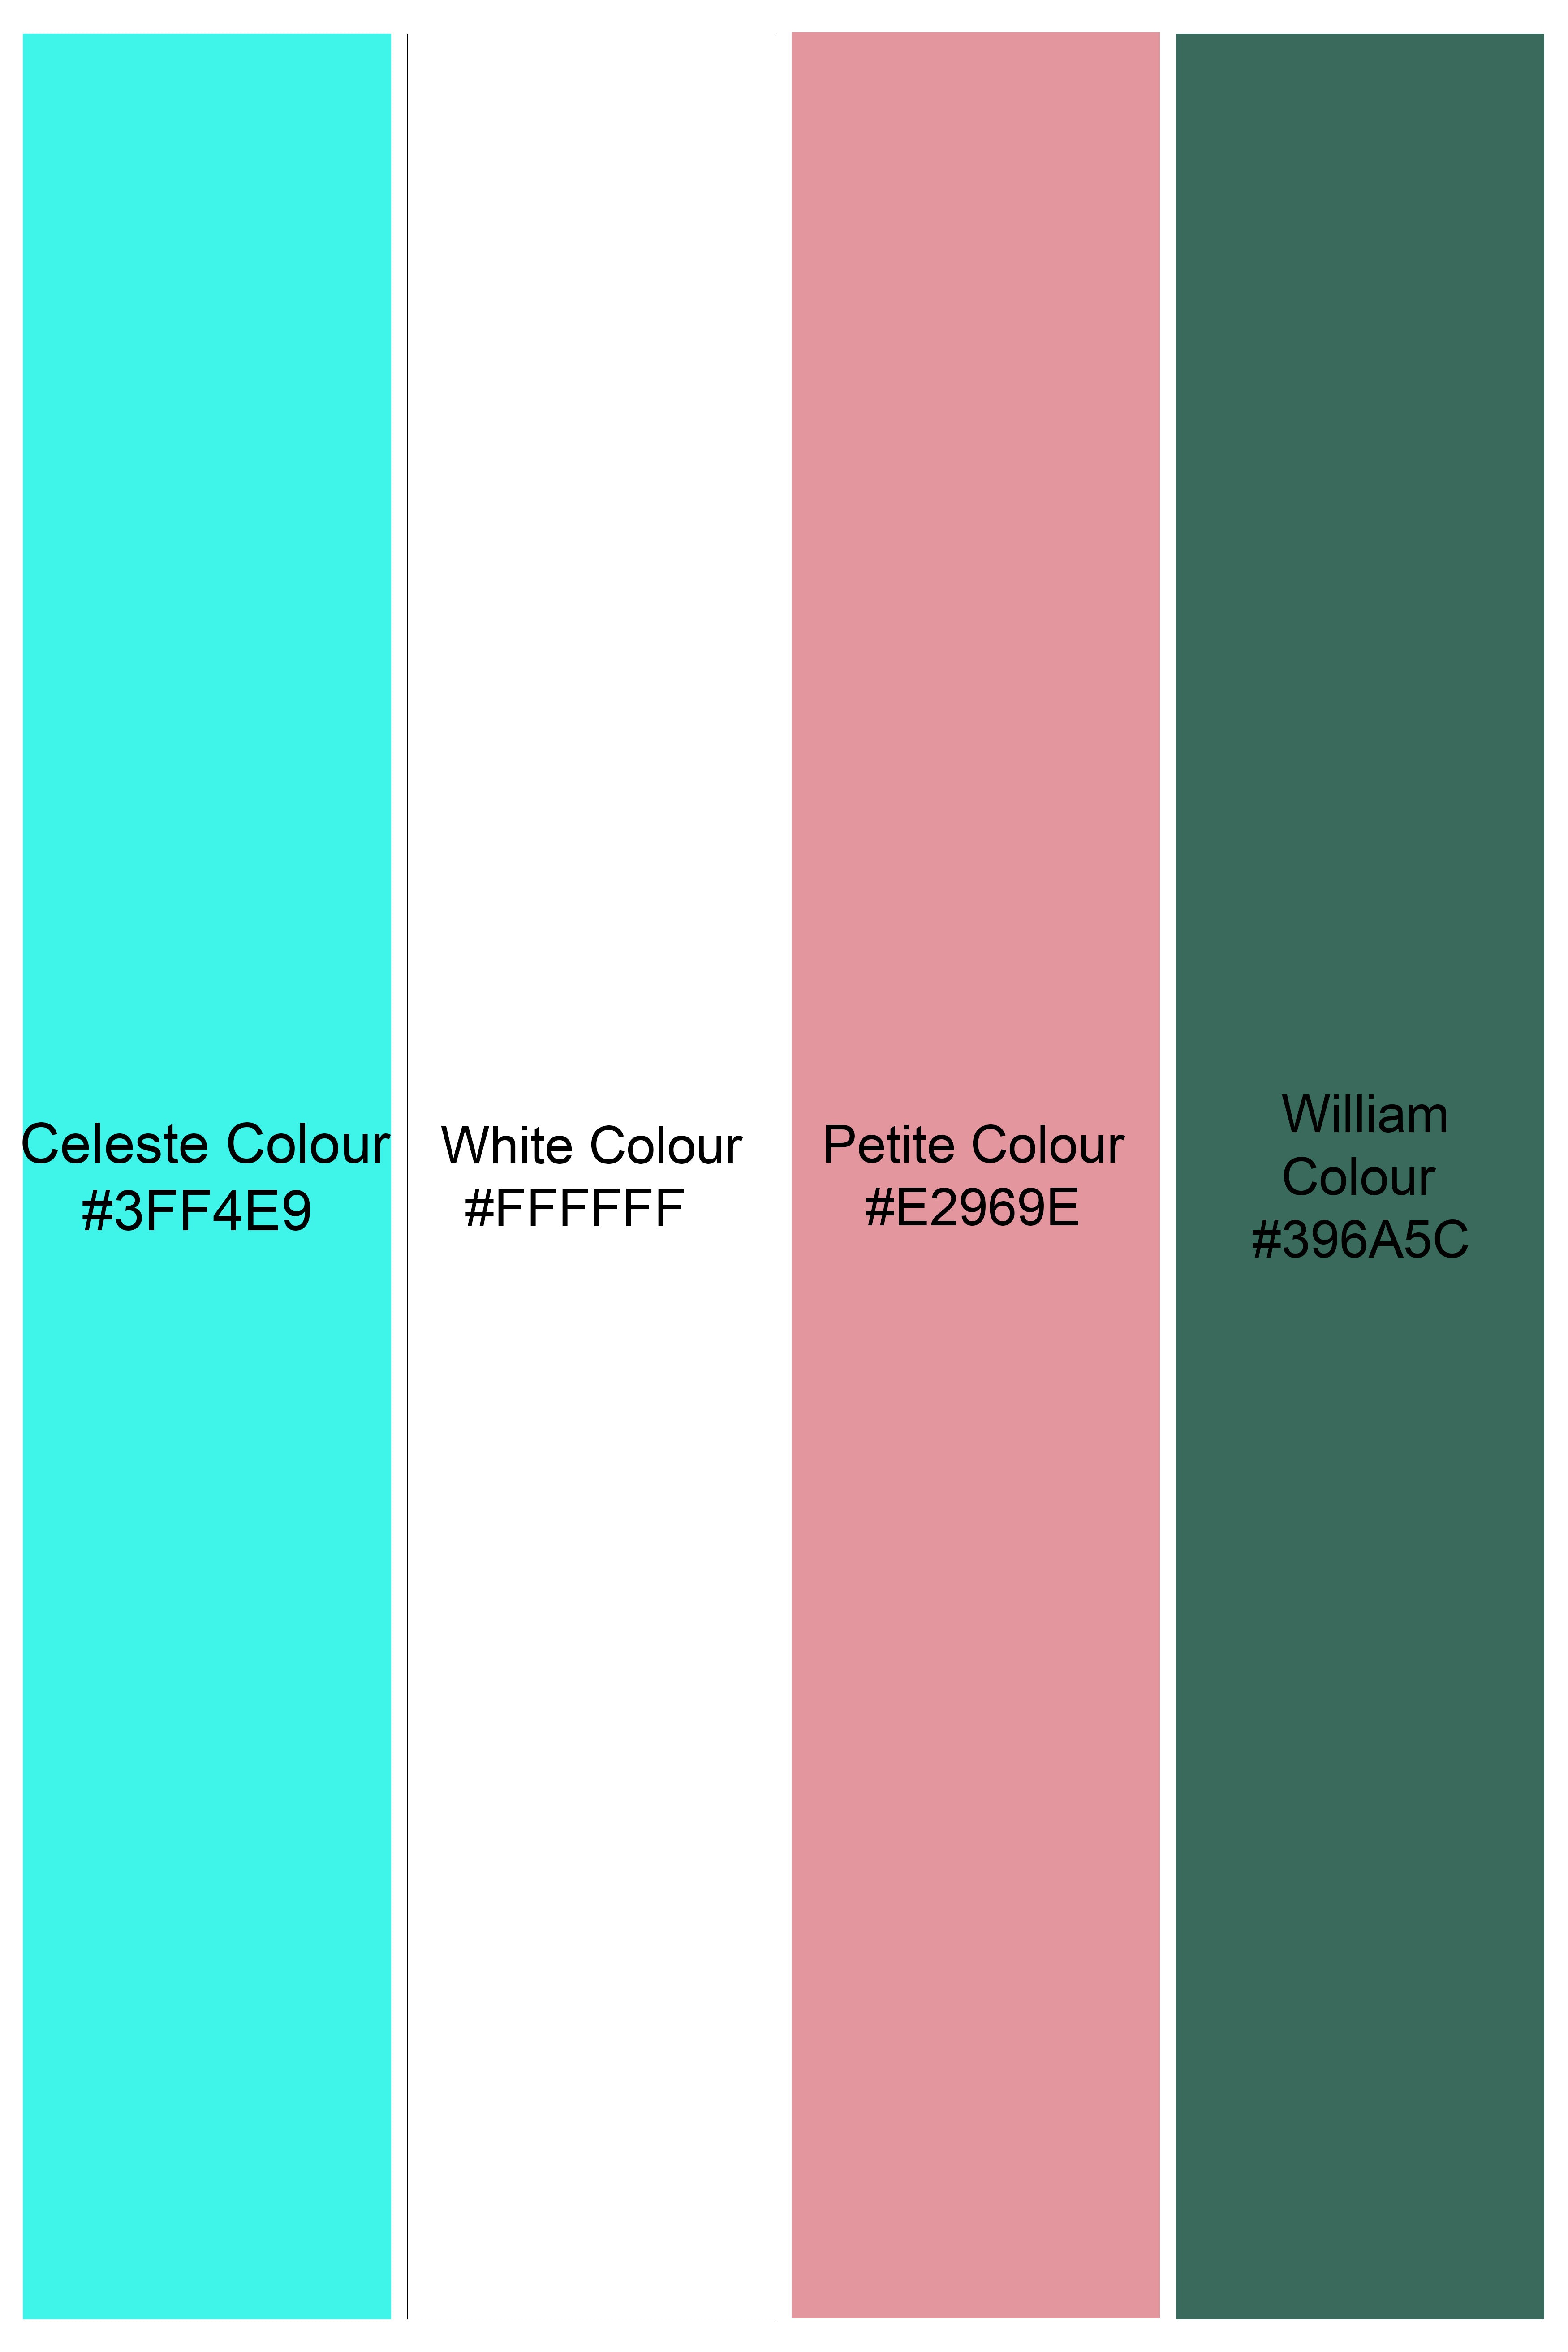 Bright White and William Green Multicolour Tropical Printed Subtle Sheen Super Soft Premium Cotton Designer Shirt 12182-CC-SS-38, 12182-CC-SS-39, 12182-CC-SS-40, 12182-CC-SS-42, 12182-CC-SS-44, 12182-CC-SS-46, 12182-CC-SS-48, 12182-CC-SS-50, 12182-CC-SS-52